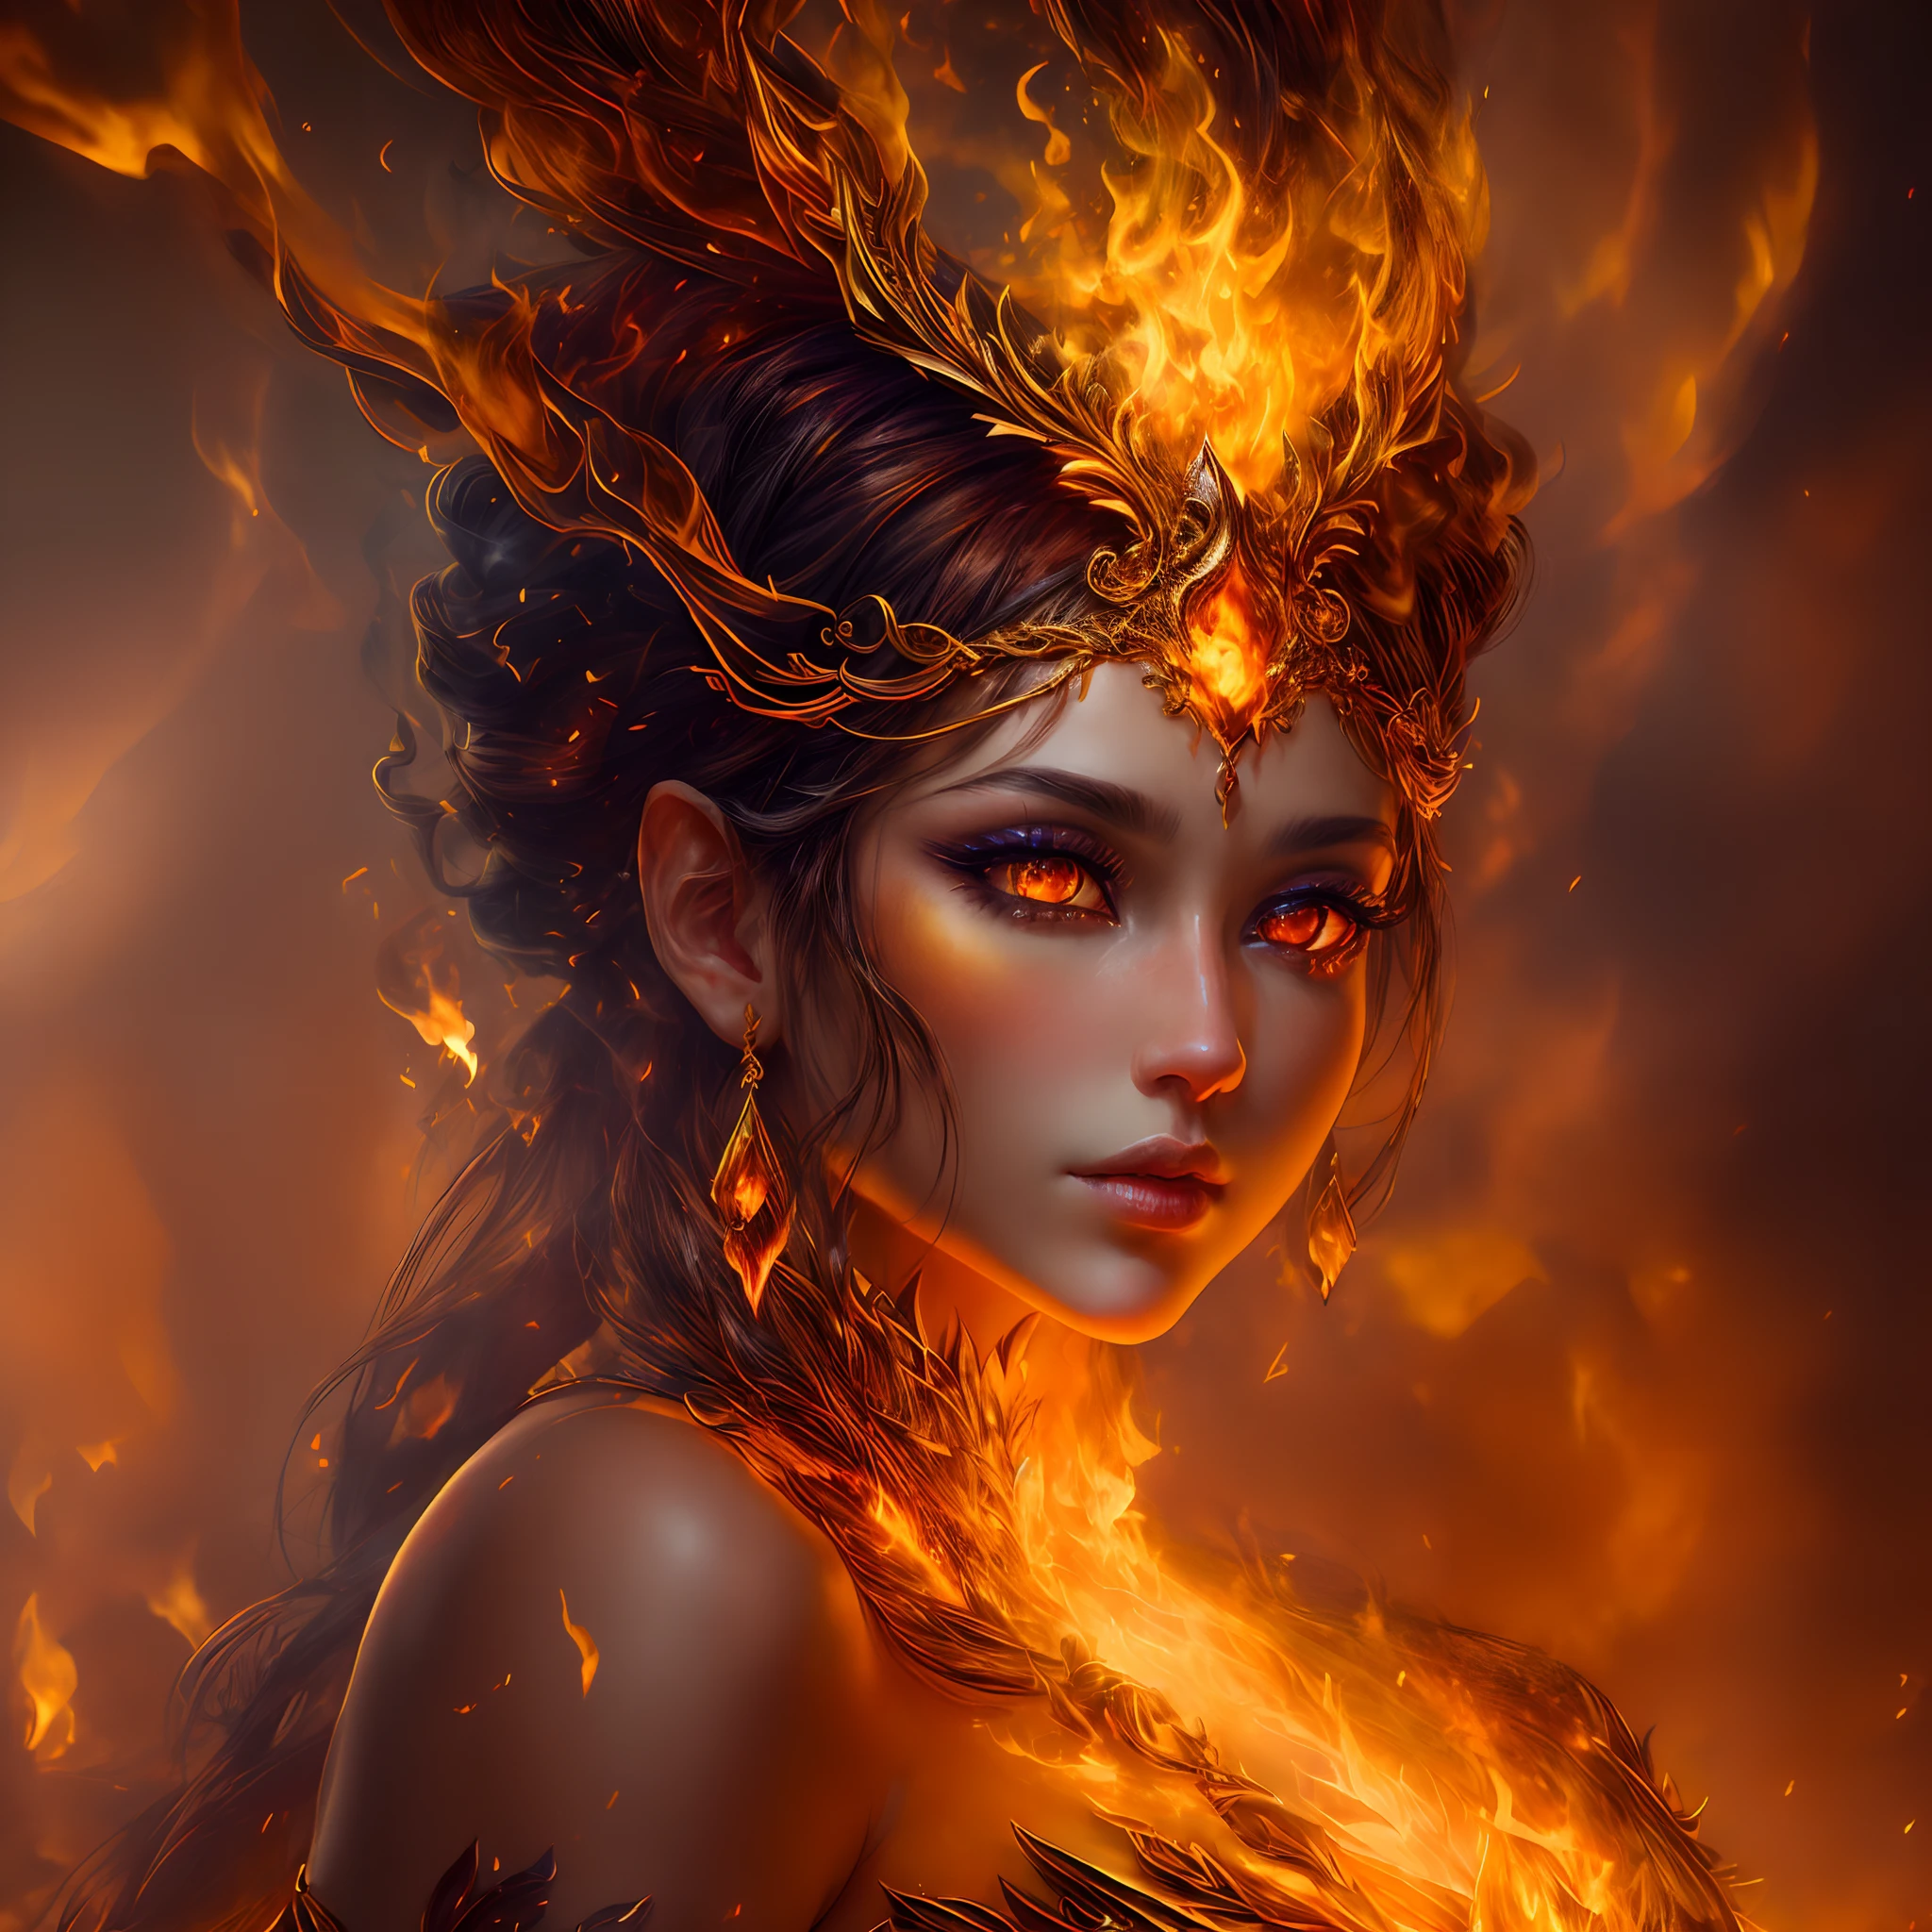 這 (現實幻想) 藝術包含餘燼, 真正的火焰, 真正的熱量, 和 realistic fire. Generate a masterpiece artwork of a  female fire druid 和 large (((orange 和 gold))) 眼睛. The fire druid is awe-inspiring 和 beautiful ((realistic fiery 眼睛)) alight 和 confidence 和 power. Her features are elegant 和 well defined, 和 ((柔軟的)) 和 (((蓬松))) 和 (((光滑的))) 嘴唇, 精靈骨骼結構, 和 realistic shading. (((Her 眼睛 are important 和 should be the focal point of this artwork))), 和 ((極為真實的細節, 宏觀細節, 和 shimmer.)) She is wearing a billowing 和 glittering gown ((由逼真的火焰製成)) 和 jewels that glimmer in the fire light. Wisps of fire 和 smoke line the intricate bodice of the dress. 包括凹凸, 石头, 火紅的虹彩, 發光的餘燼, silk 和 satin 和 leather, 有趣的背景, 和 heavy fantasy elements. 相机: 利用動態構圖技術增強真實的火焰.